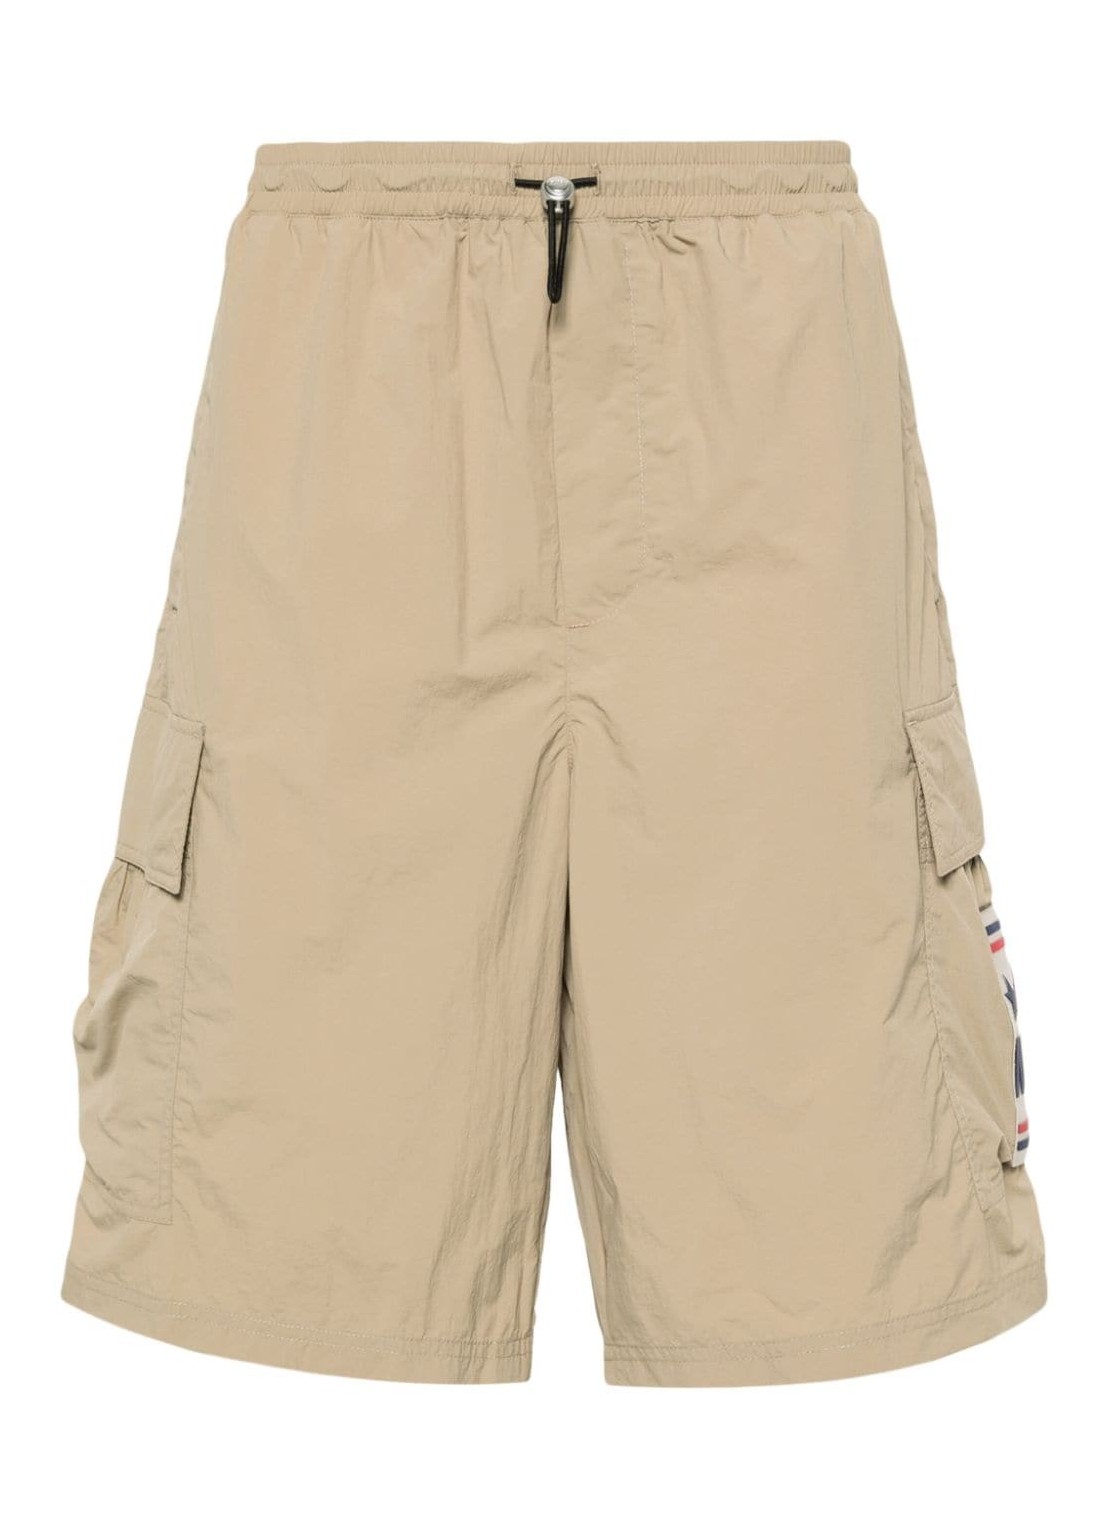 Pantalon corto autry short pant man shorts main man shpm552c 552c talla M
 